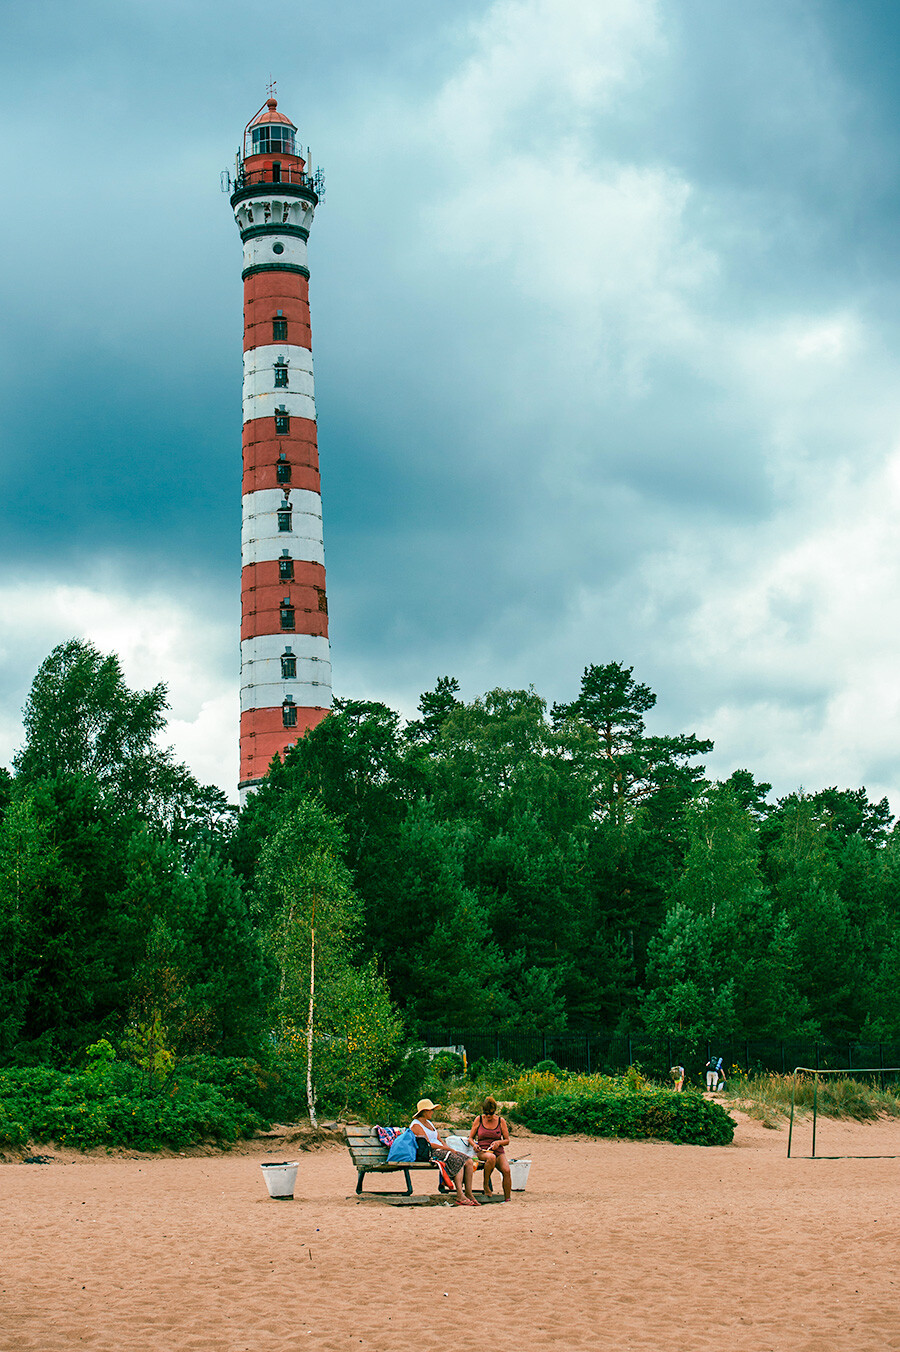 Osinovetsky lighthouse (built in 1910) in the village of Lake Ladoga, Vsevolozhsk district, Leningrad region